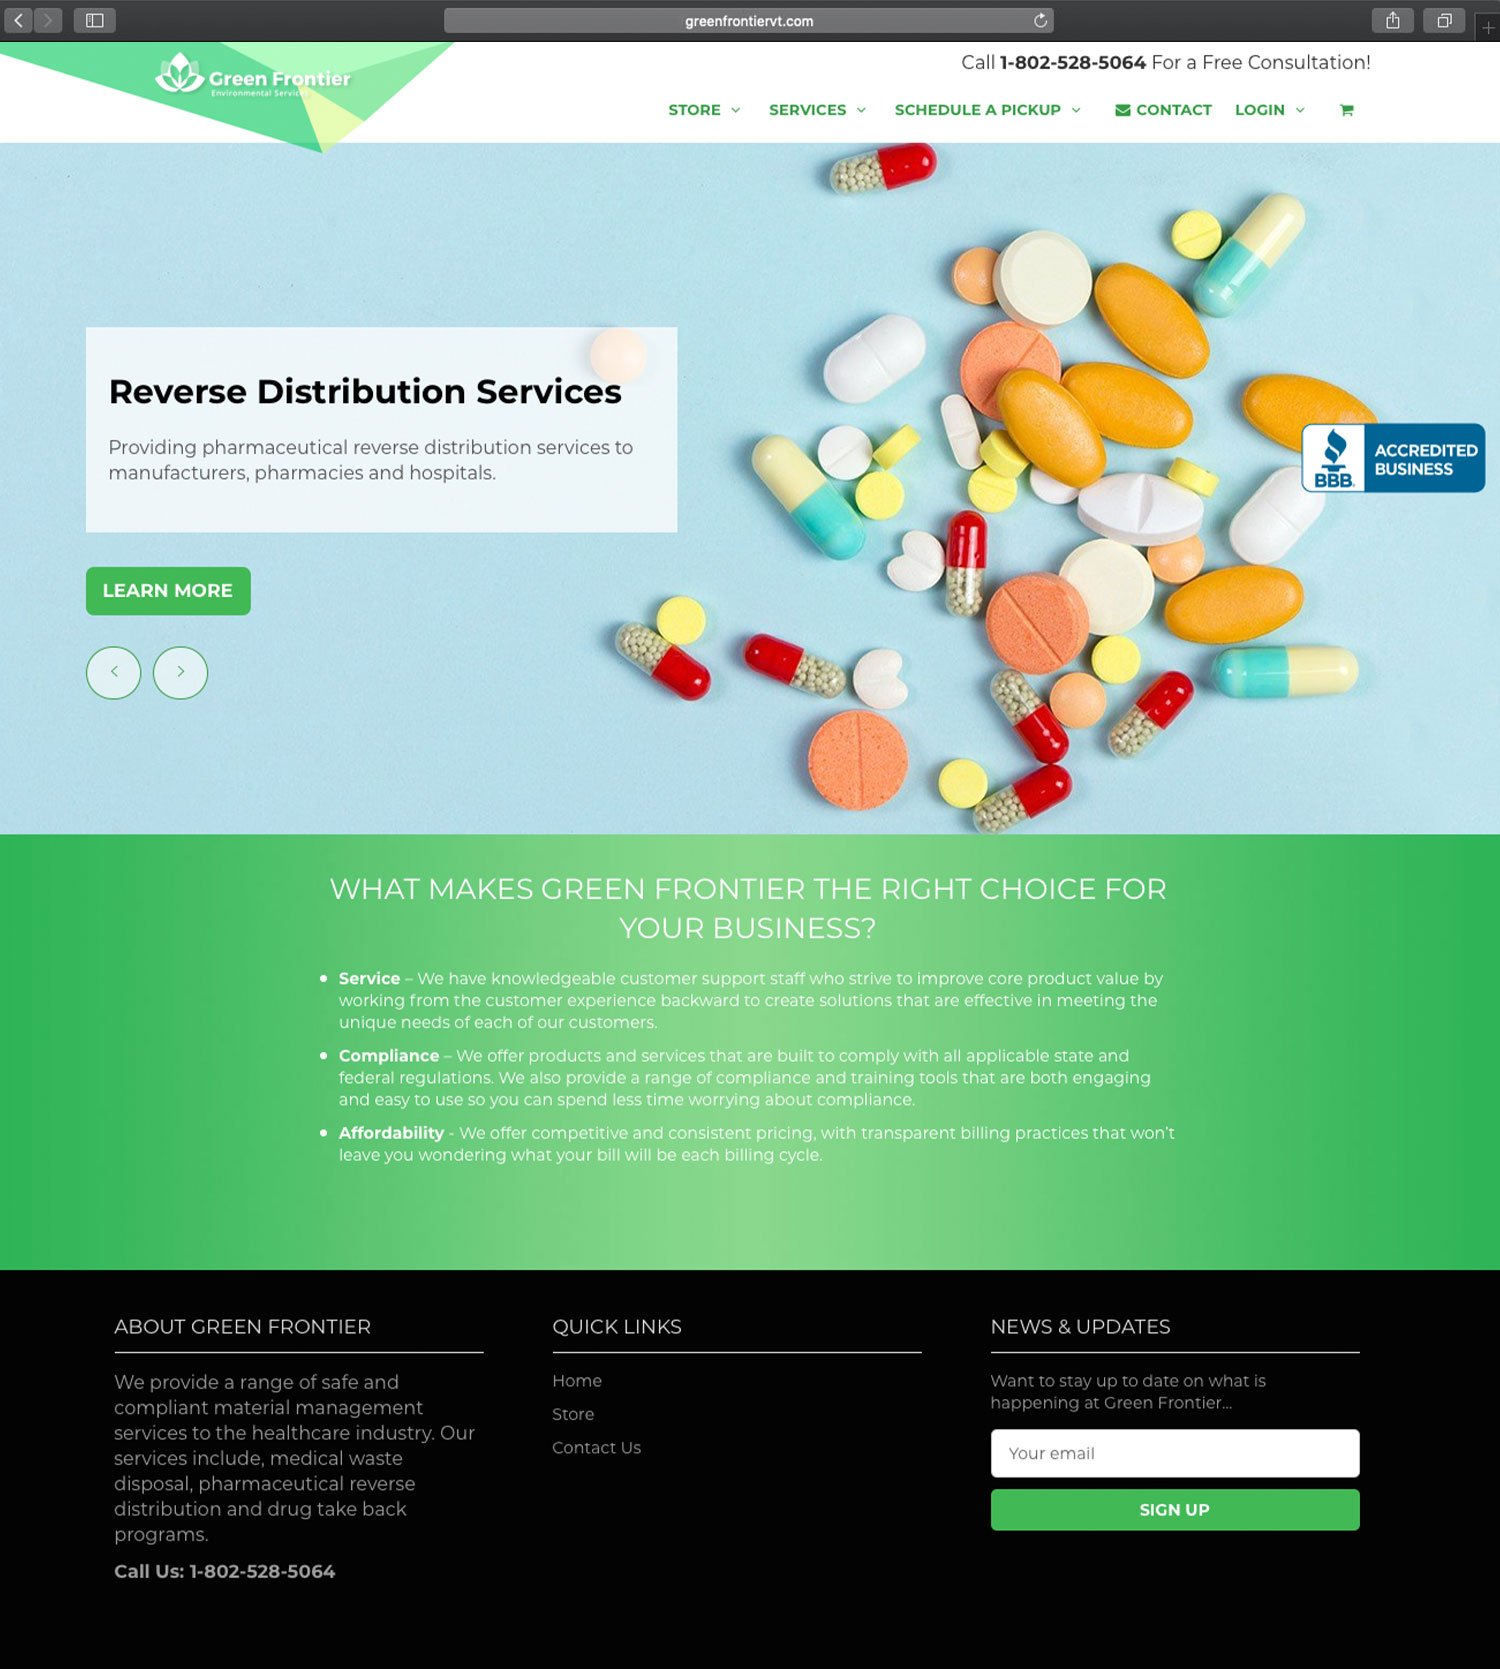 Website design and website development for Green Frontier - homepage view.